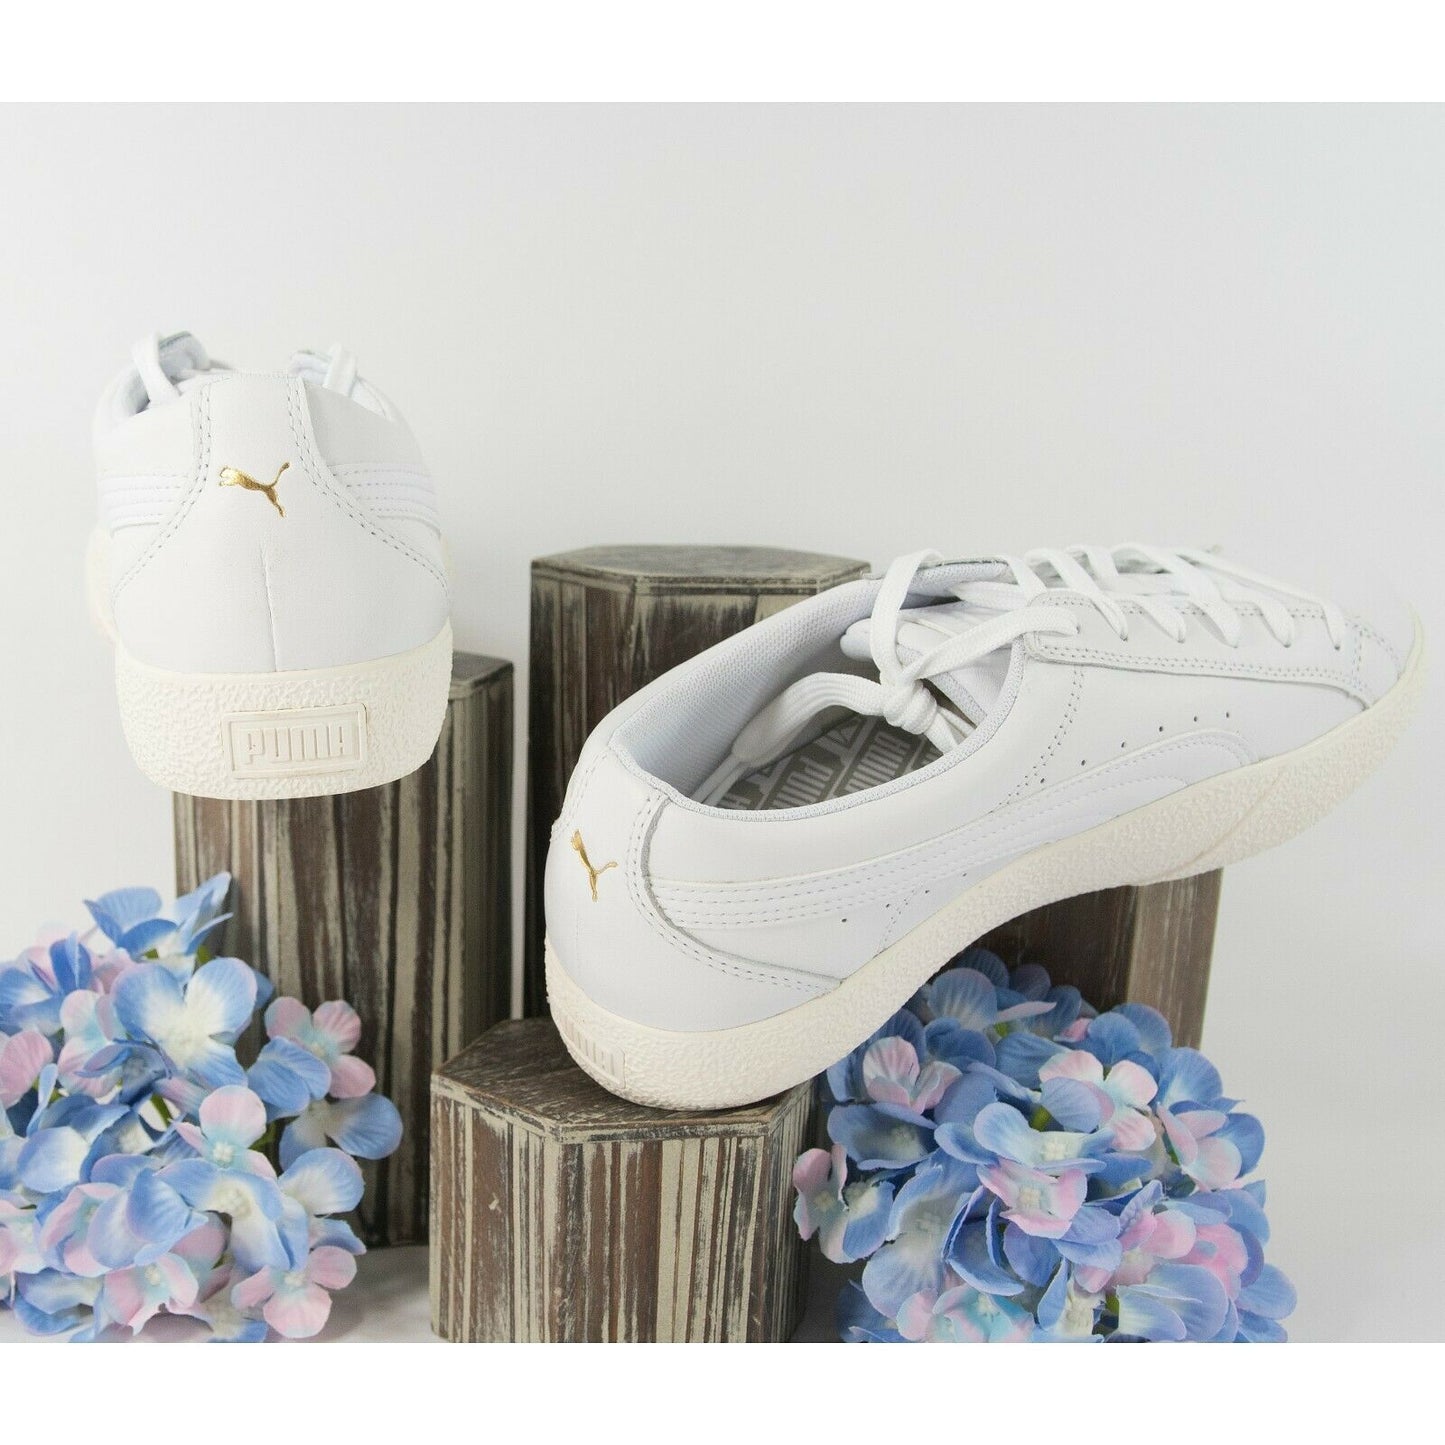 Puma White Tumble Leather Love Court Athletic Sneakers 9.5 NIB